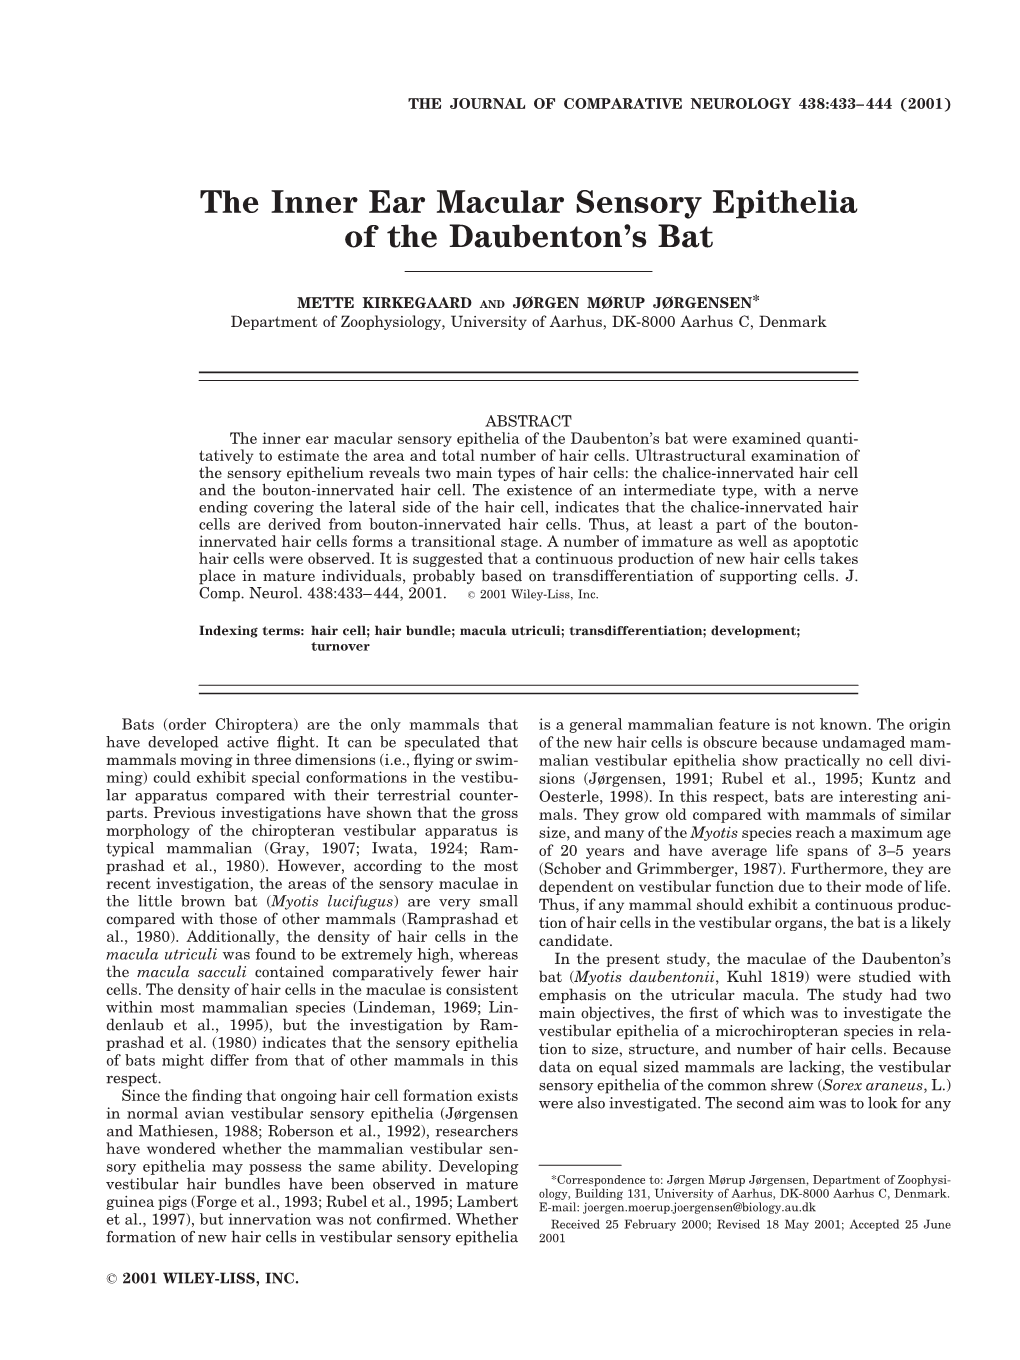 The Inner Ear Macular Sensory Epithelia of the Daubenton's